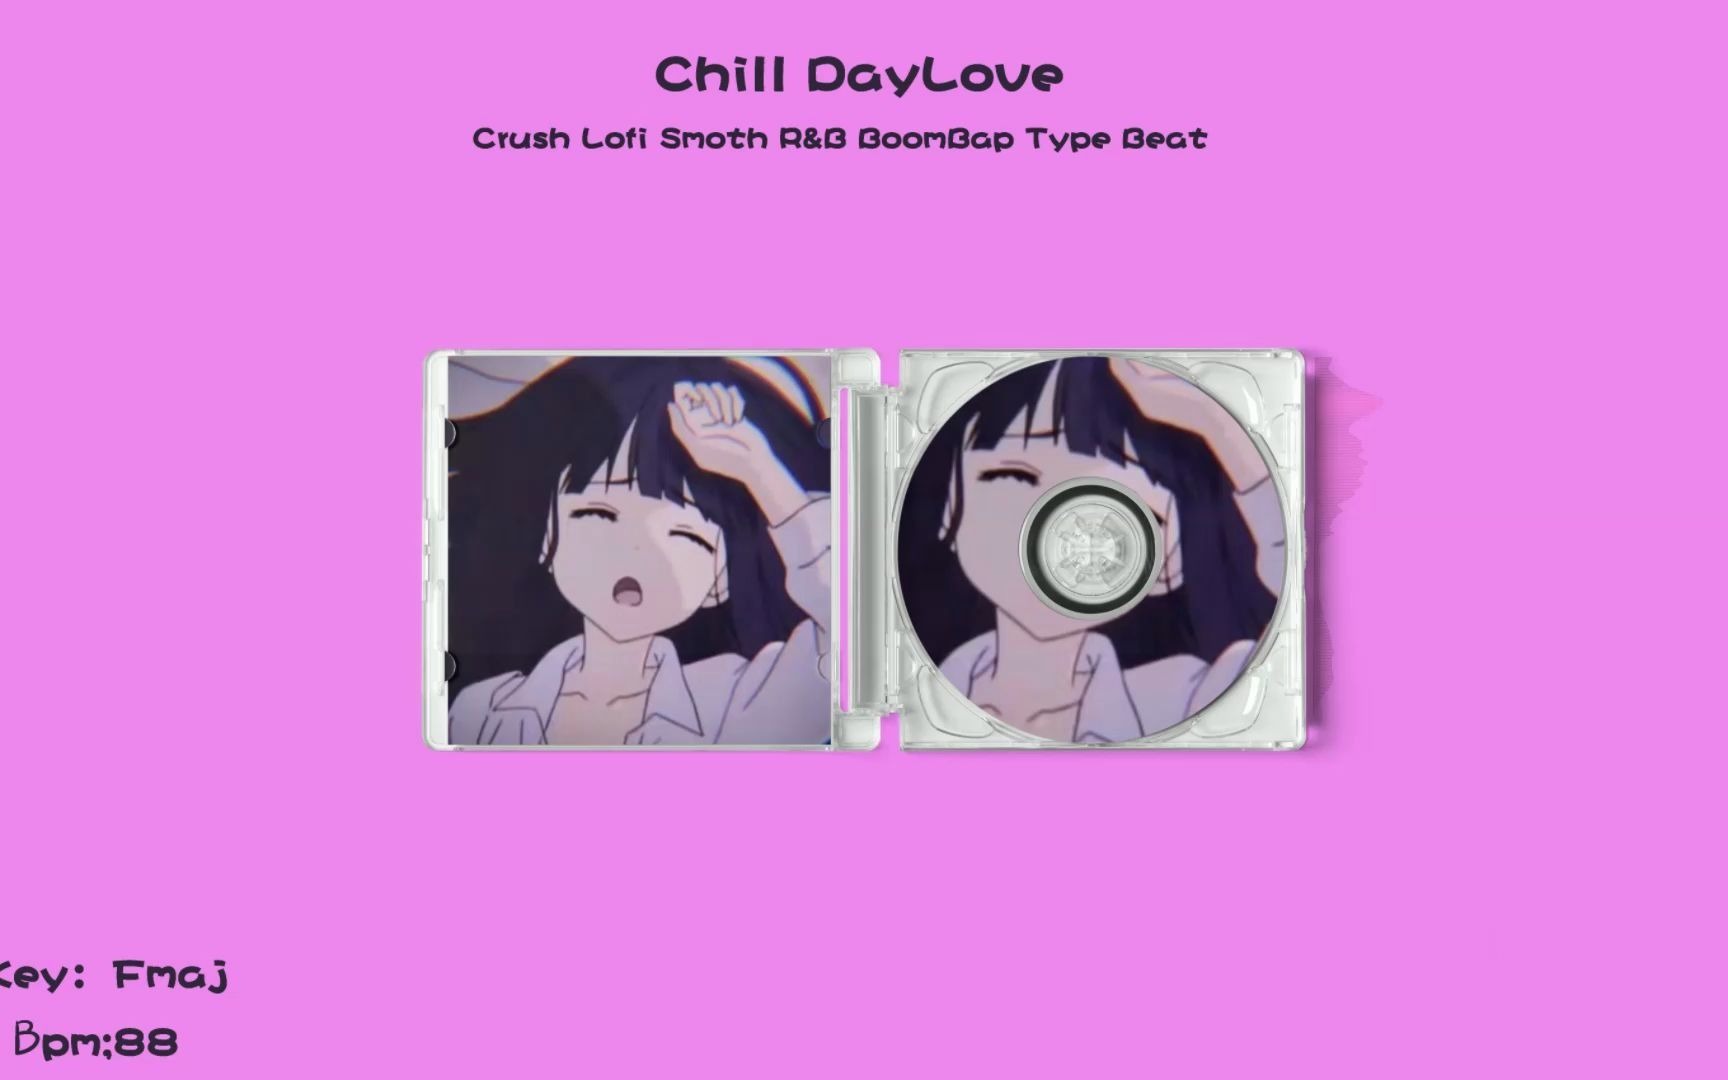 前奏秒沦陷 太chill了太喜欢了 |Crush Lofi Smoth R&B BoomBap Type Beat“Chill DayLove”|